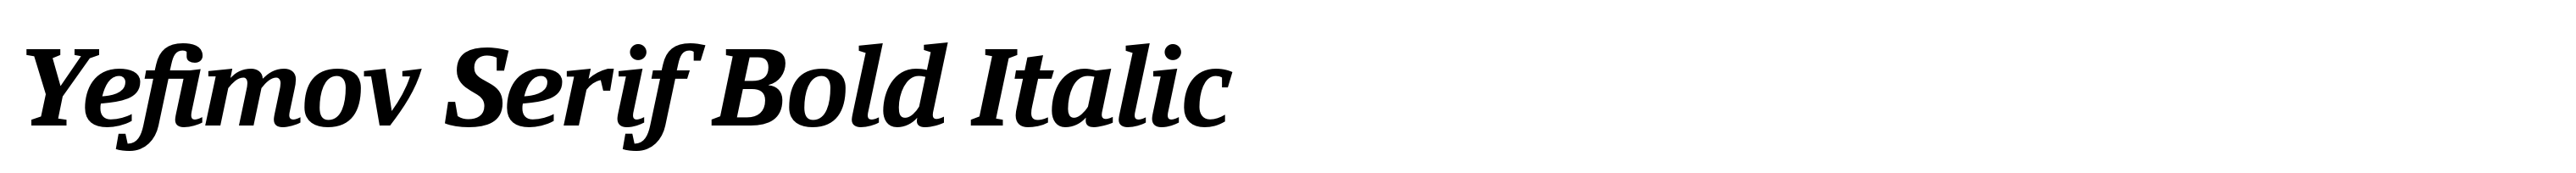 Yefimov Serif Bold Italic